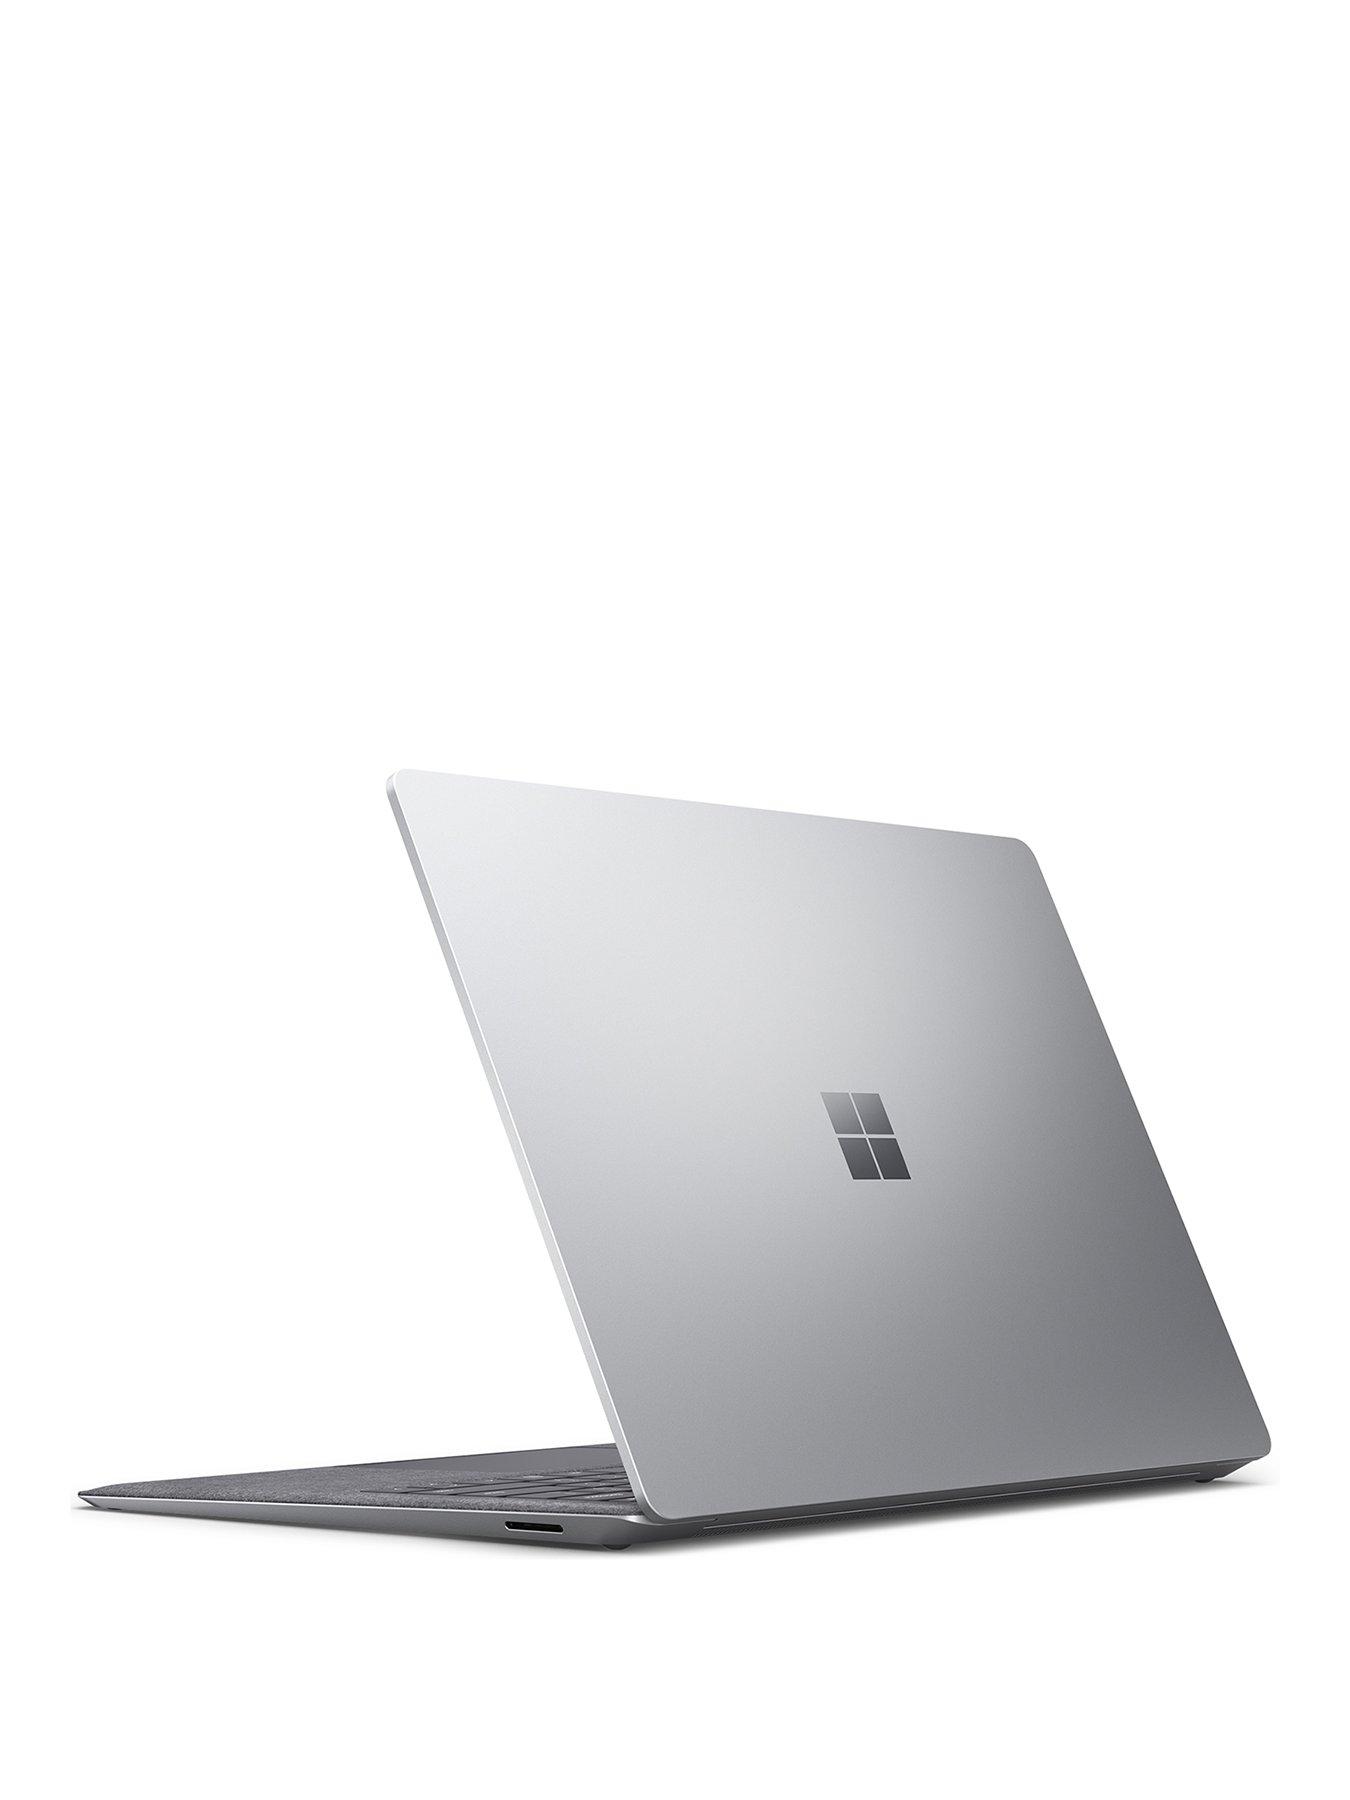 Microsoft Surface Laptop 5 - 13.5in PixelSense Touchscreen, Intel 